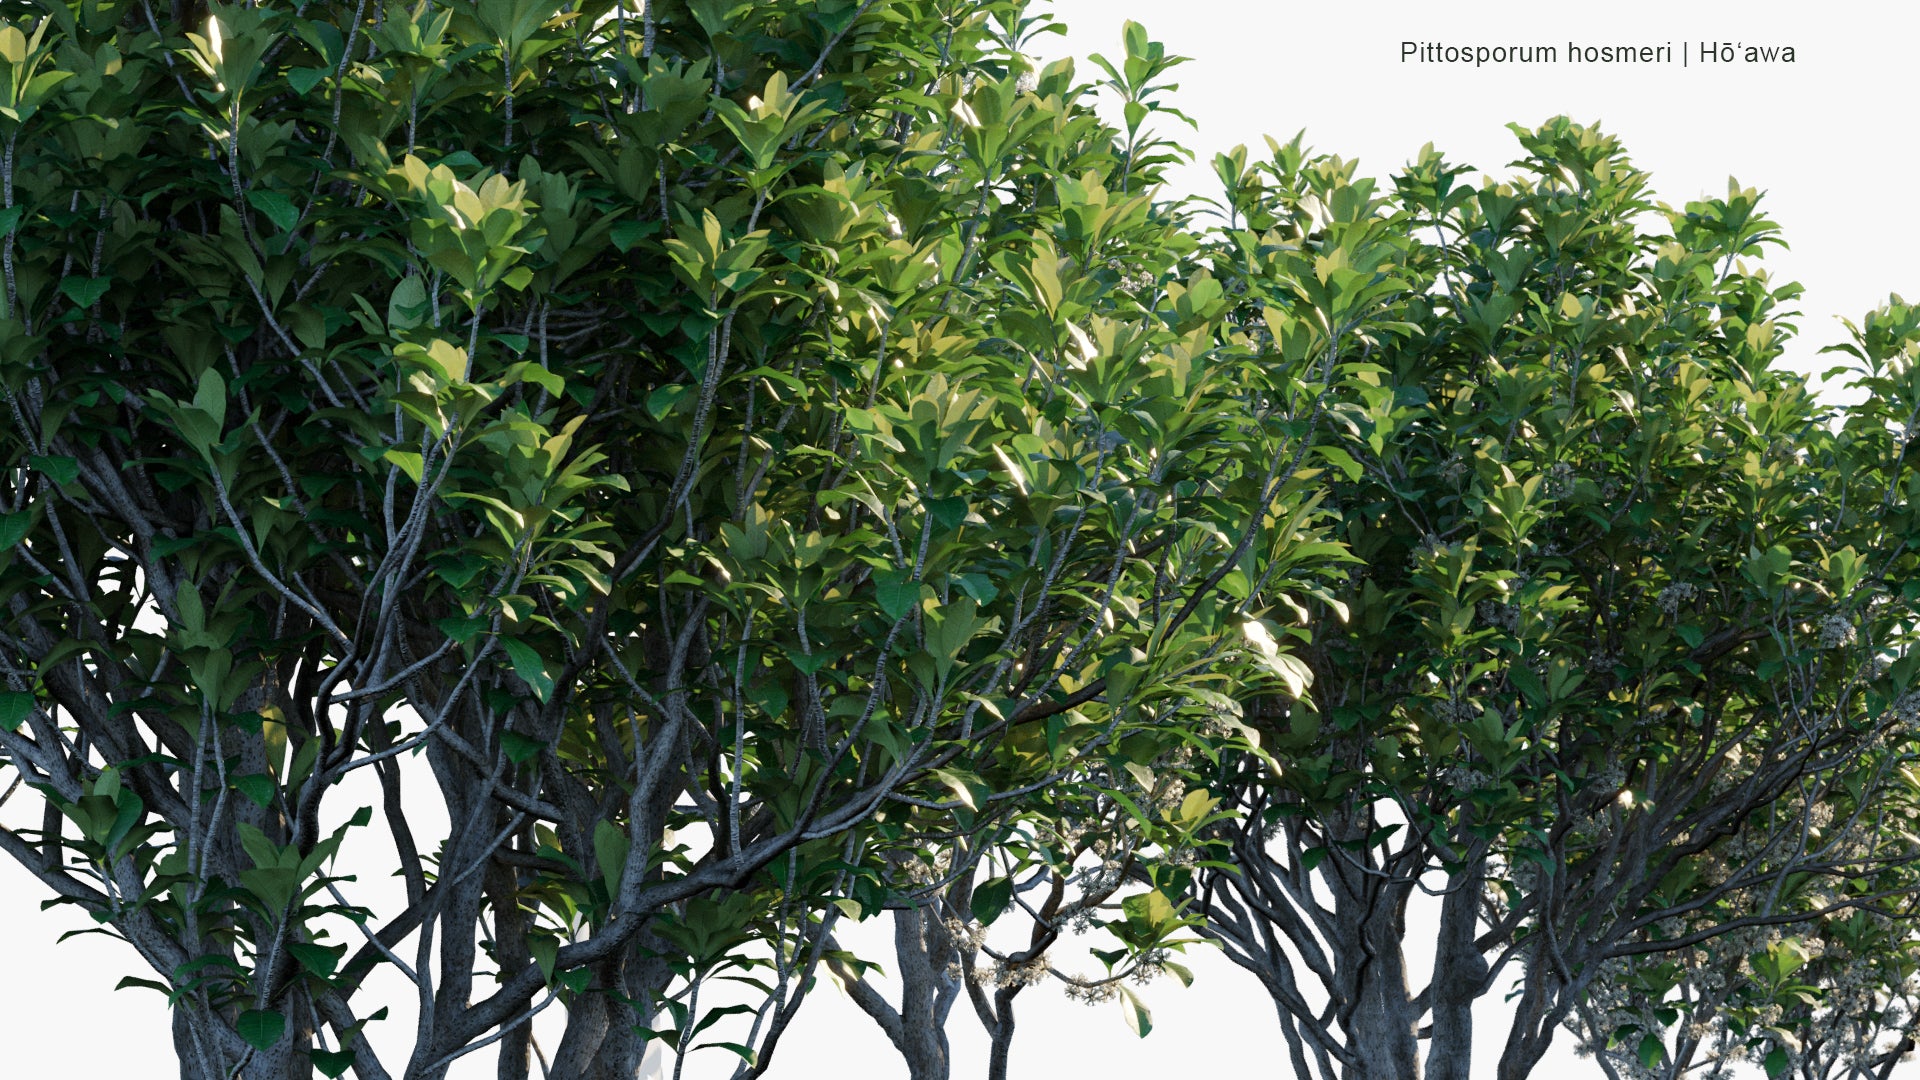 Pittosporum Hosmeri - Ho'awa, Hawaiian Magnolia